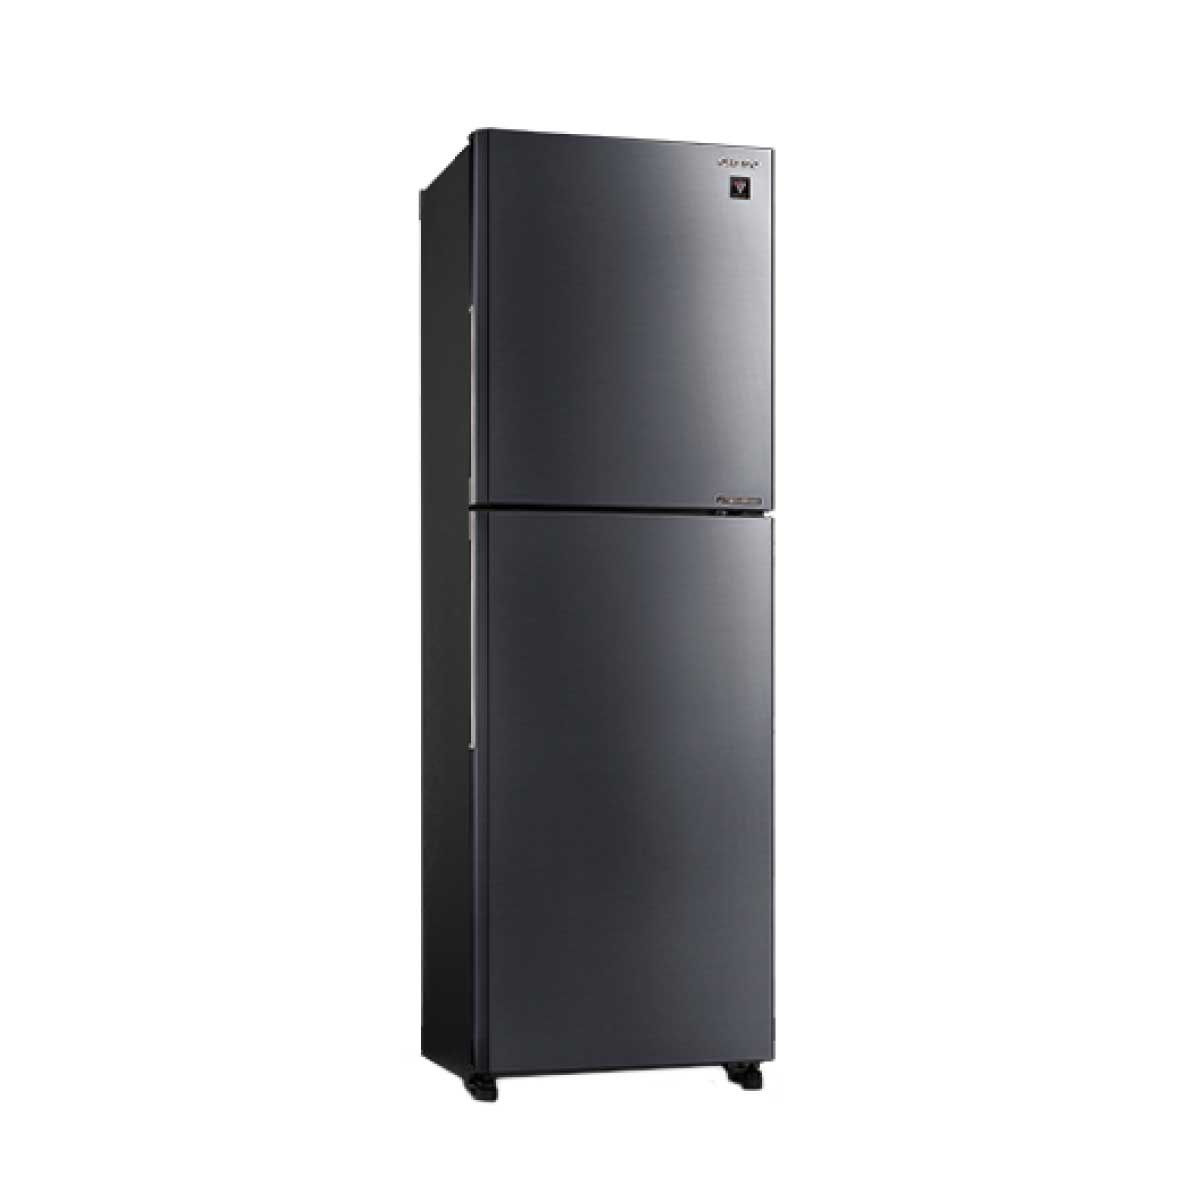 SHARP ตู้เย็น 2 ประตู PEACH SERIES 8.9 คิว Inverter รุ่น SJ-XP260T-DK